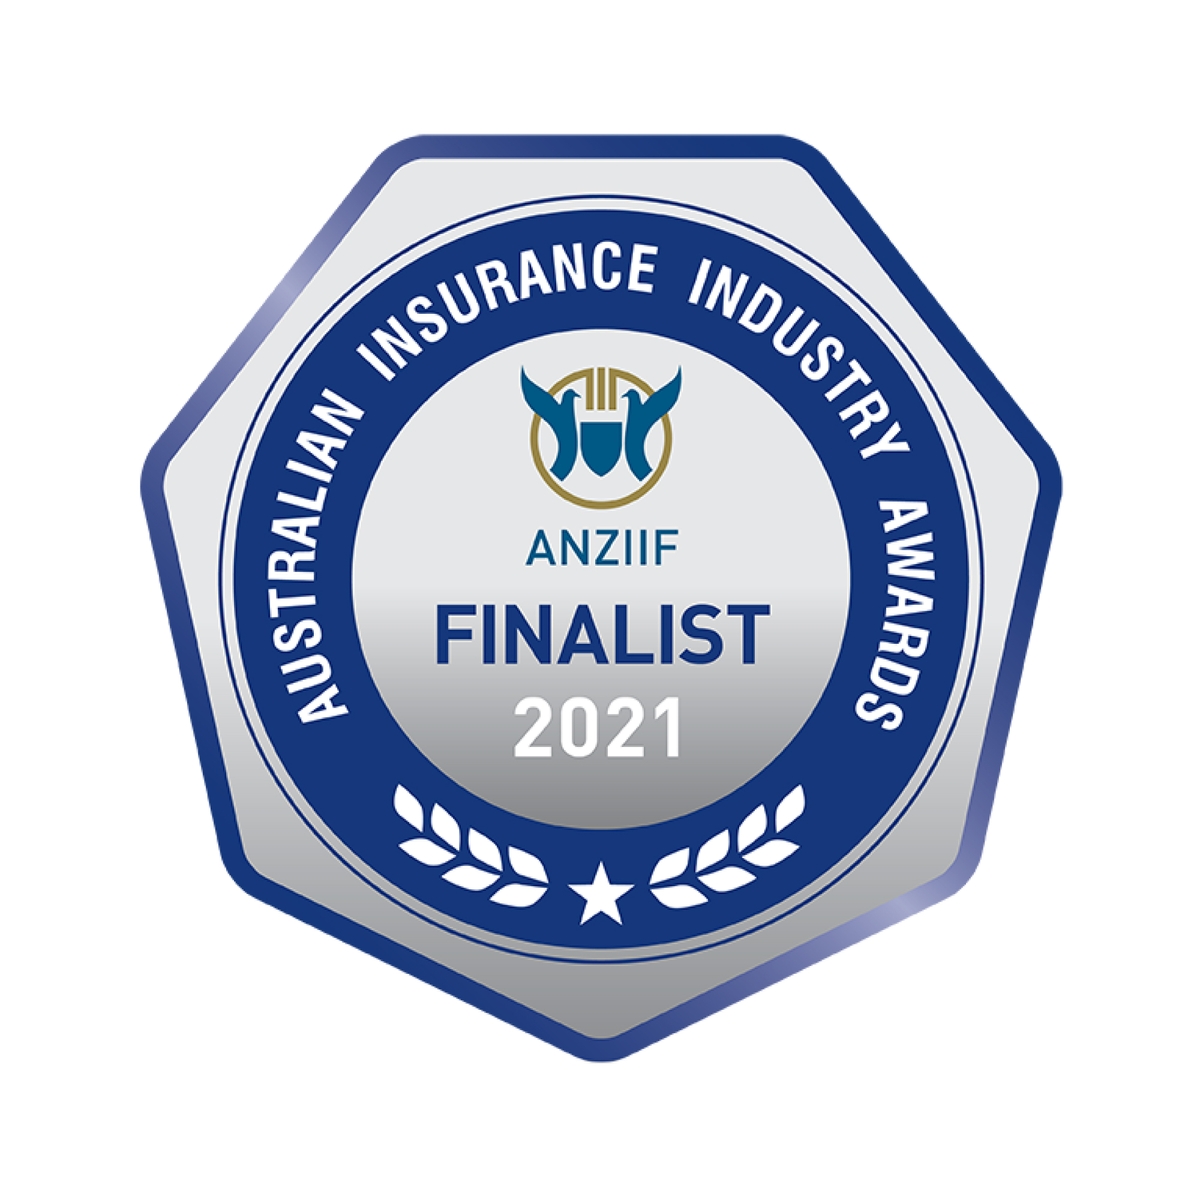 Australian Insurance Industry Awards